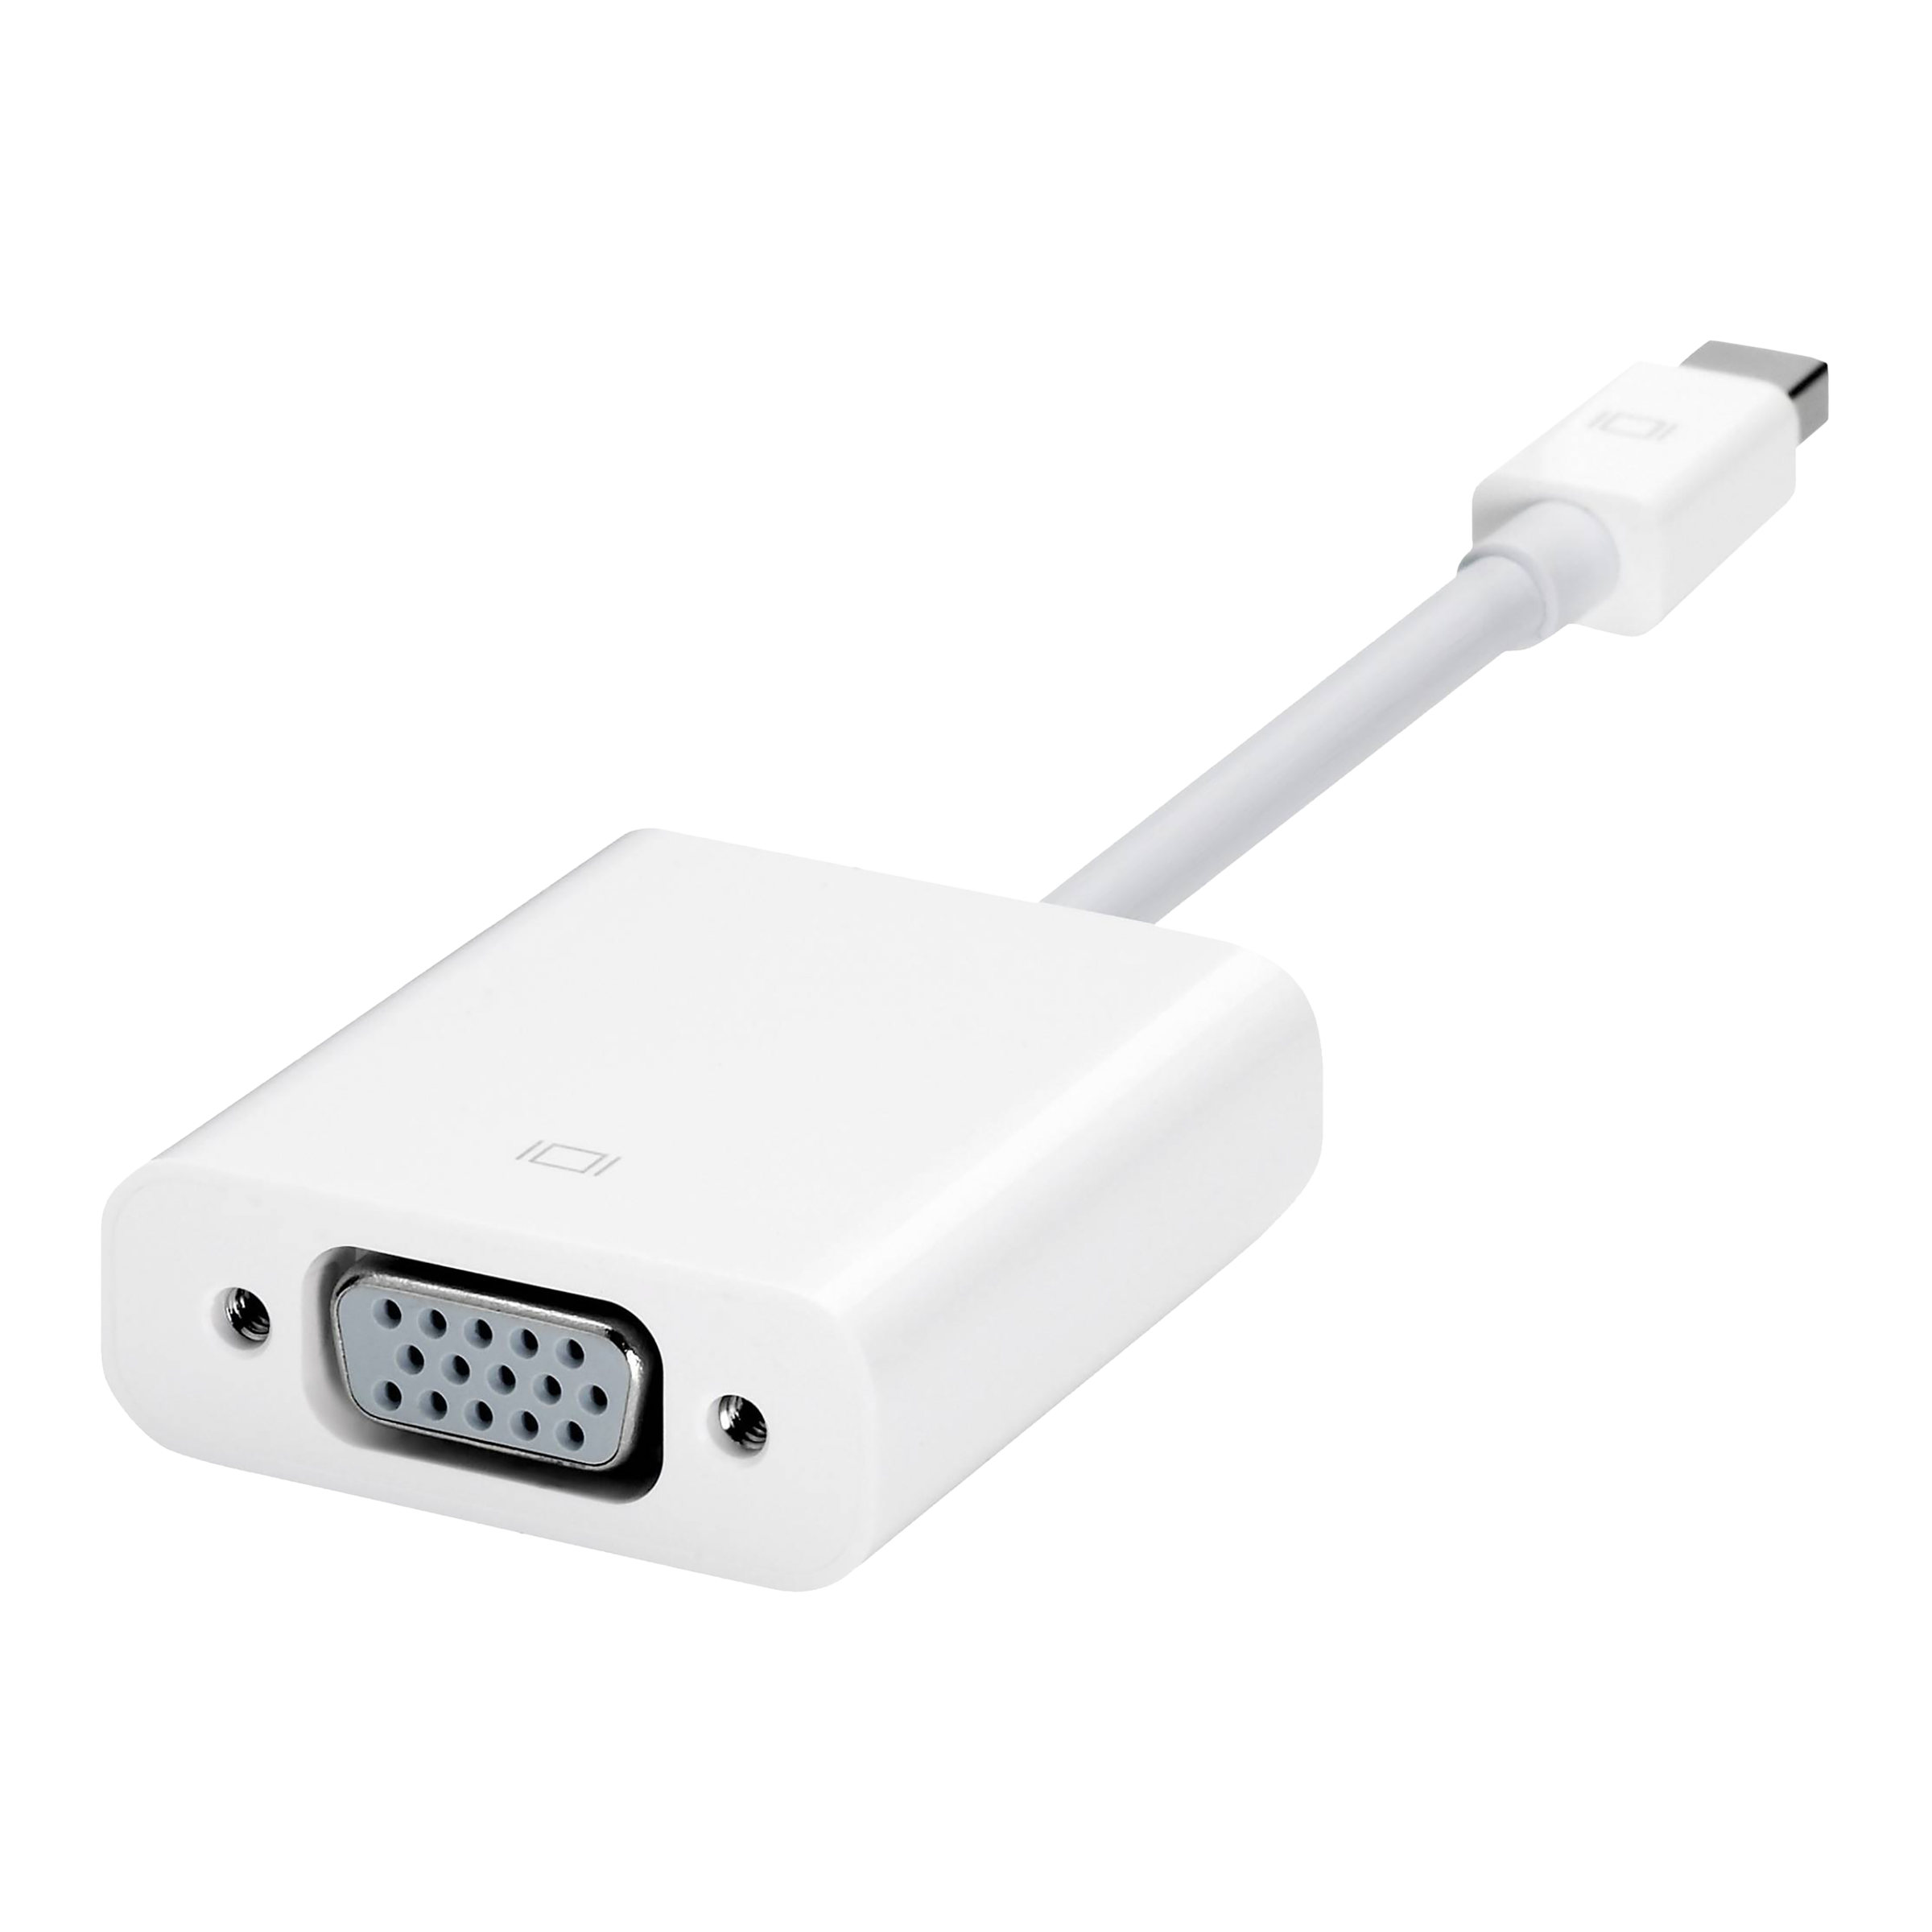 Indsprøjtning Præfiks omhyggeligt Buy Apple Mini DisplayPort to VGA Port Adapter (Video Display Function,  White) Online – Croma